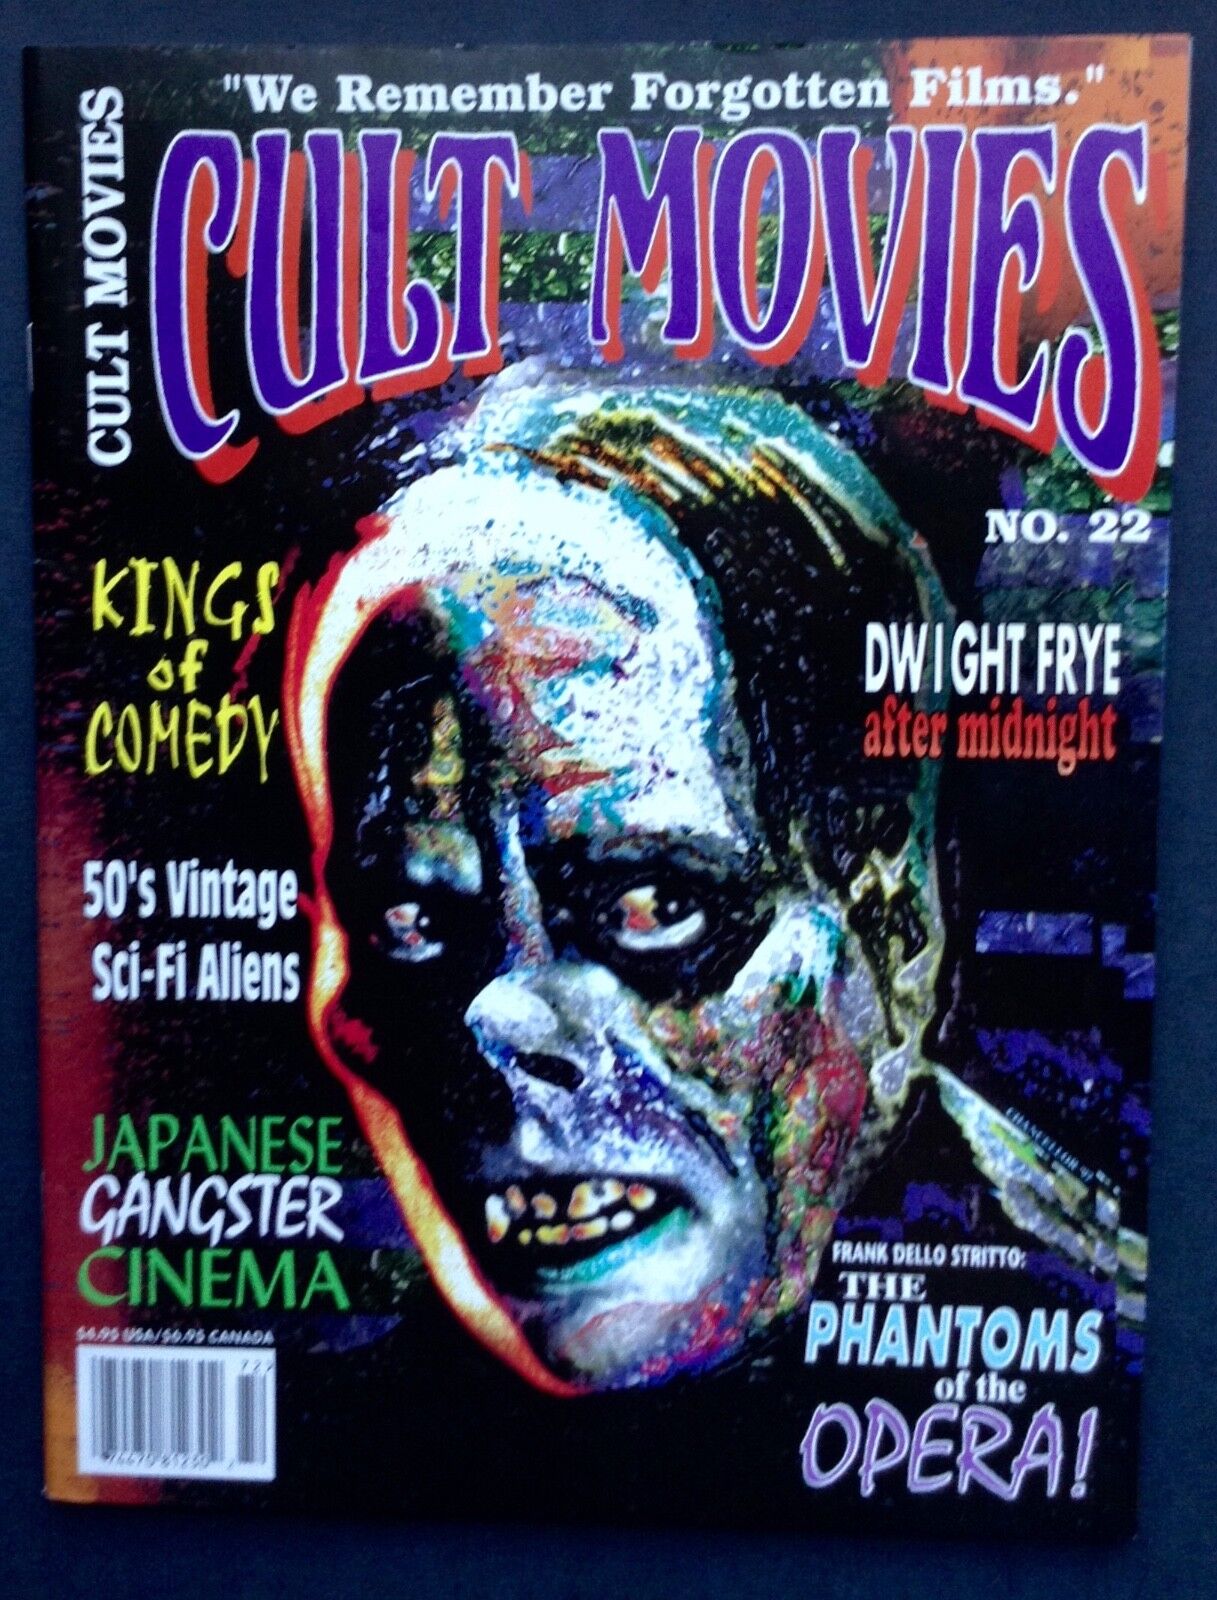 Cult Movies, monster magazines, comic books, Horror film magazines, Sci-Fi